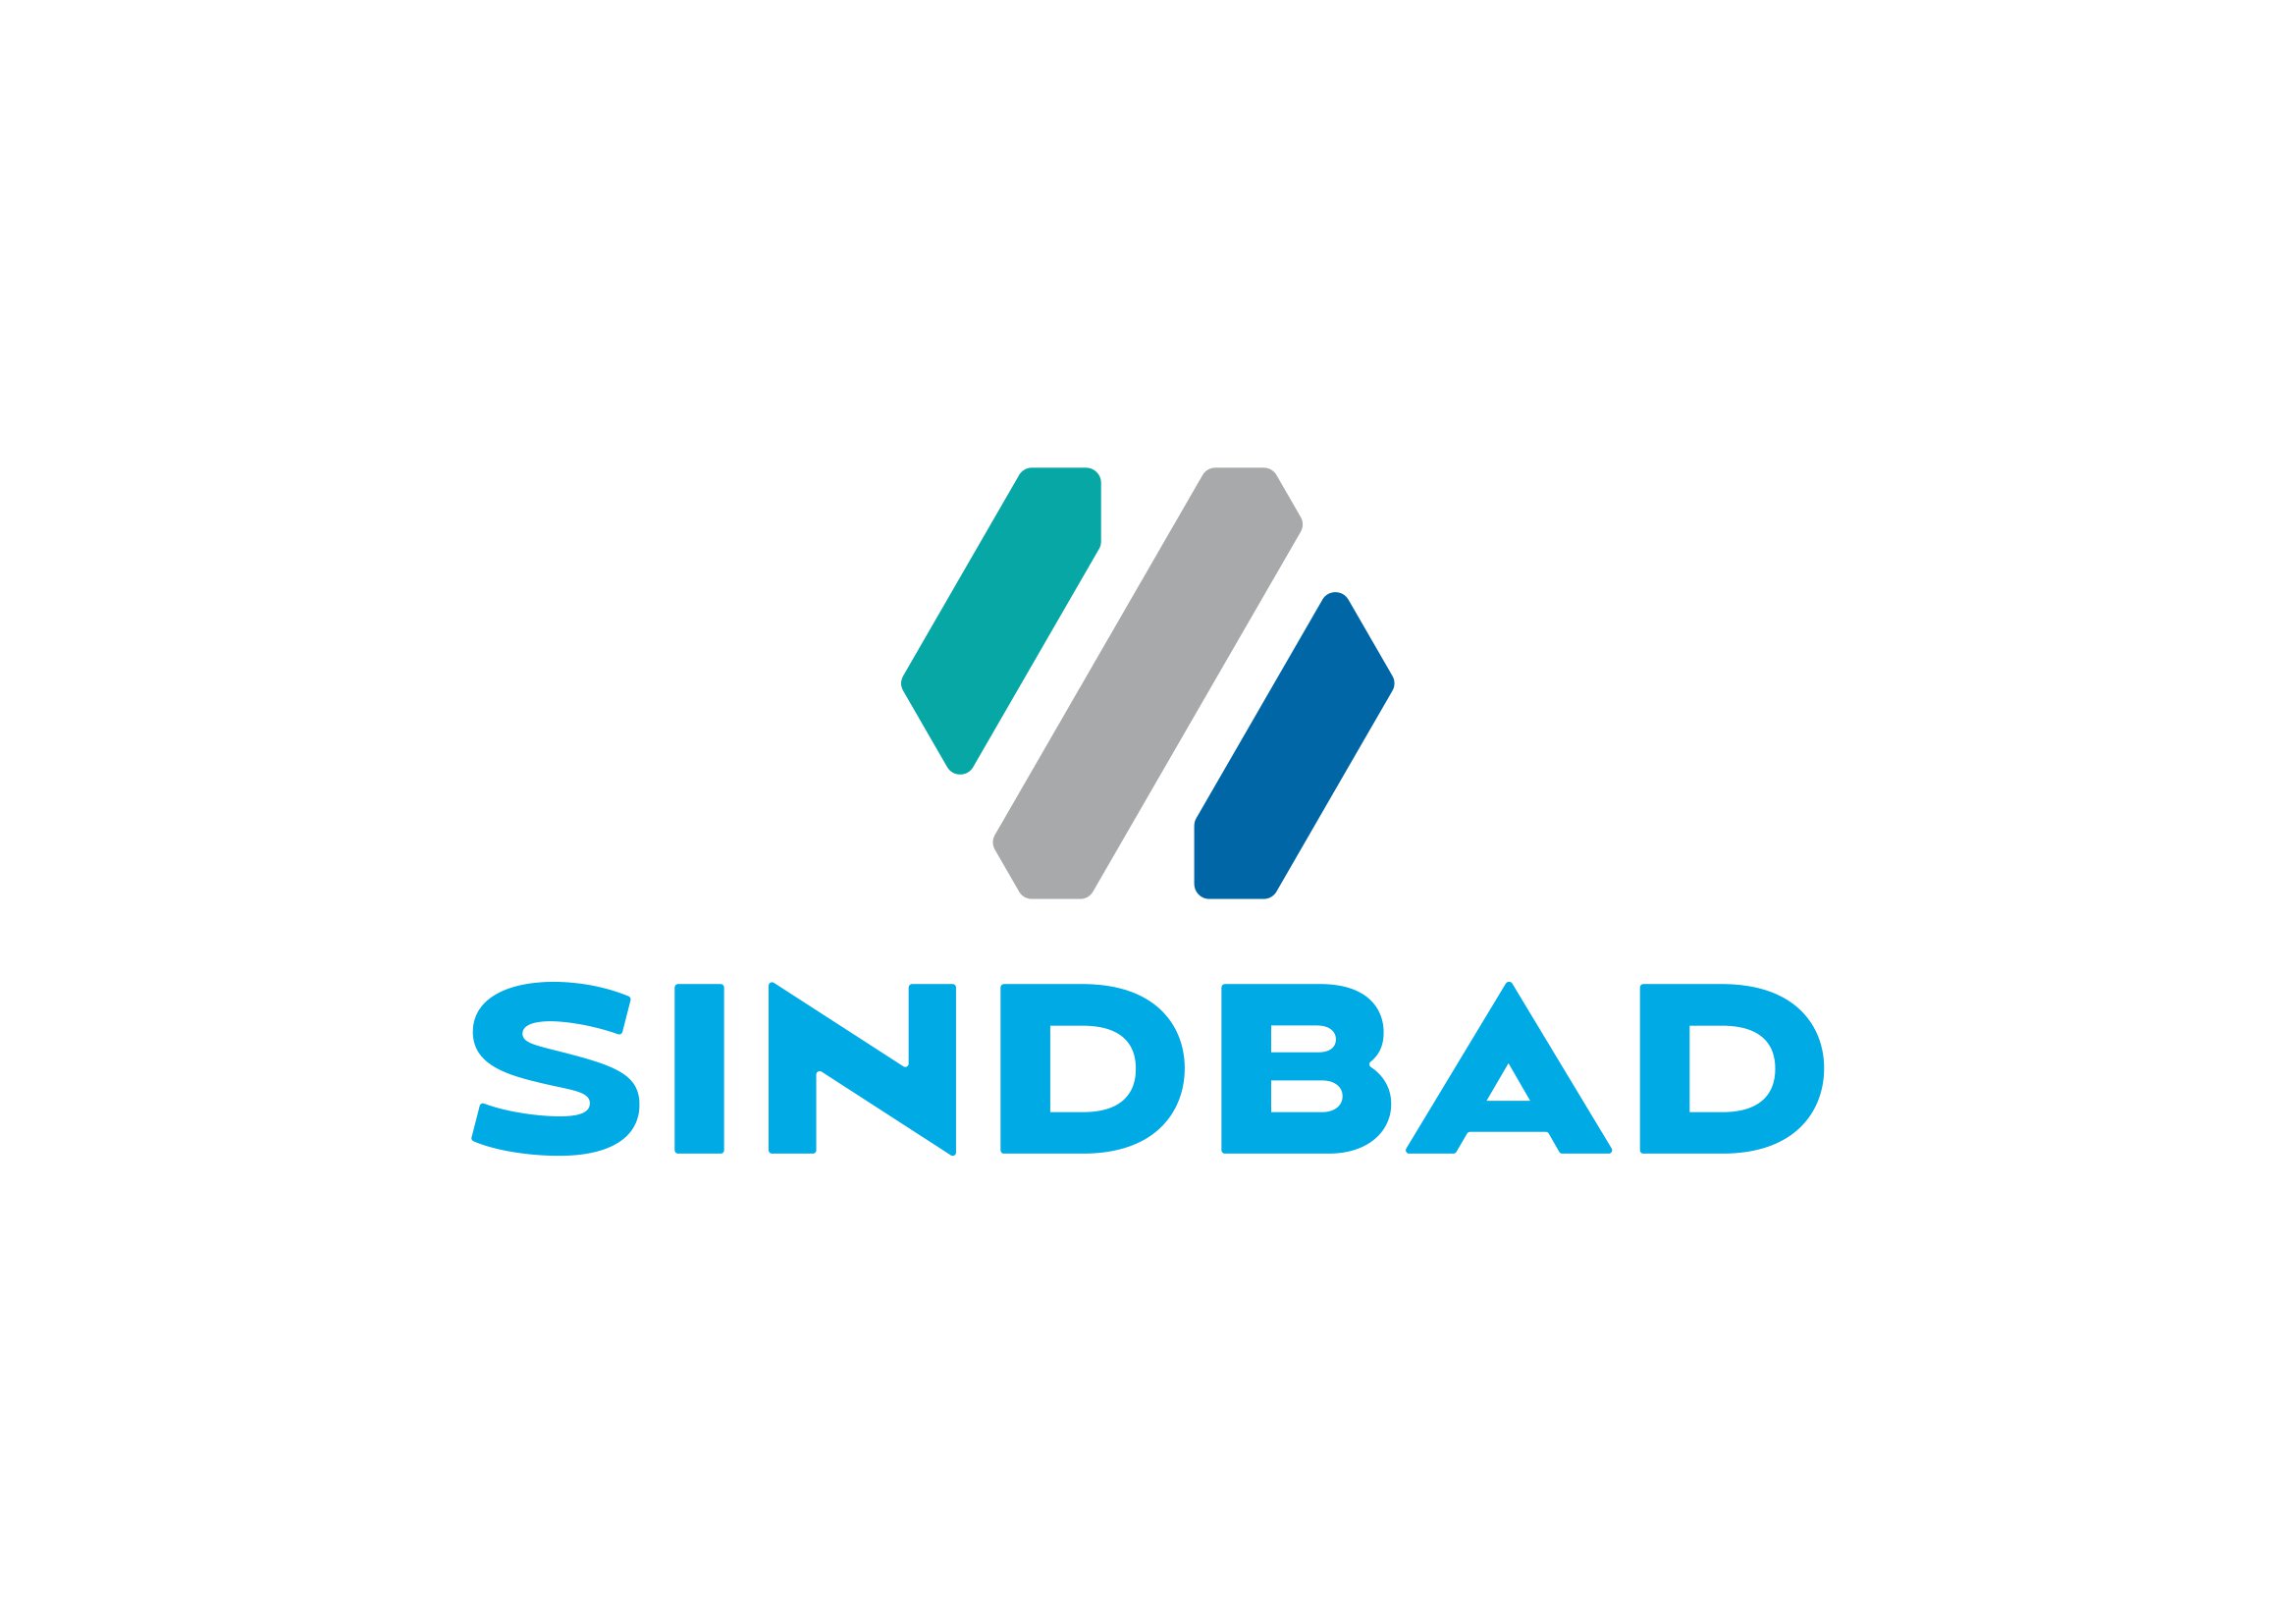 sindbad logo 181025-01